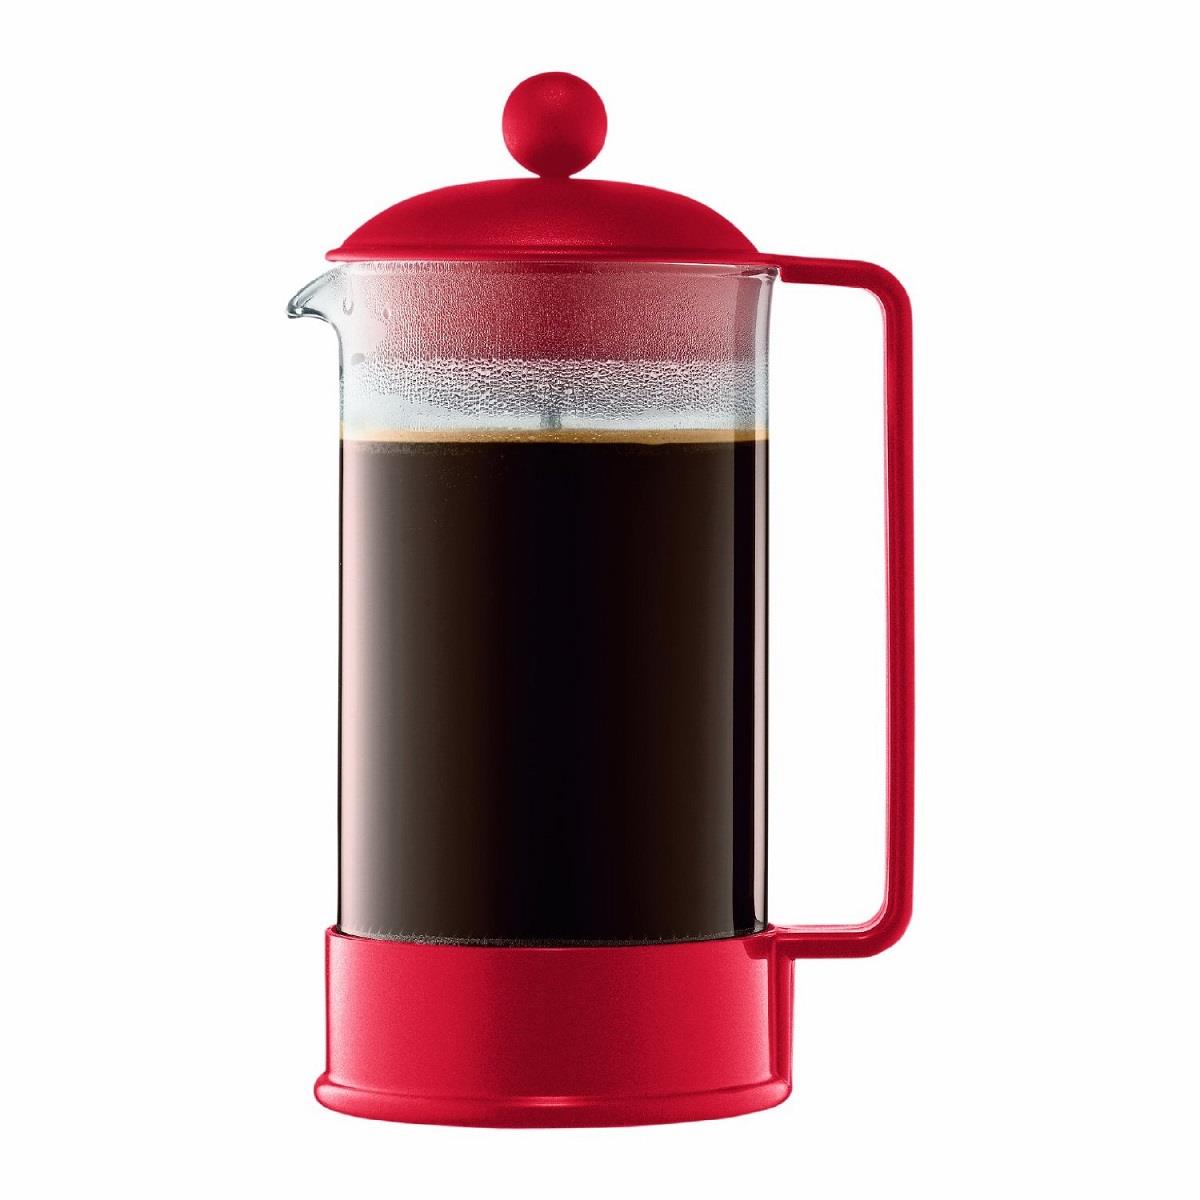 bodum brazil french press coffee maker red